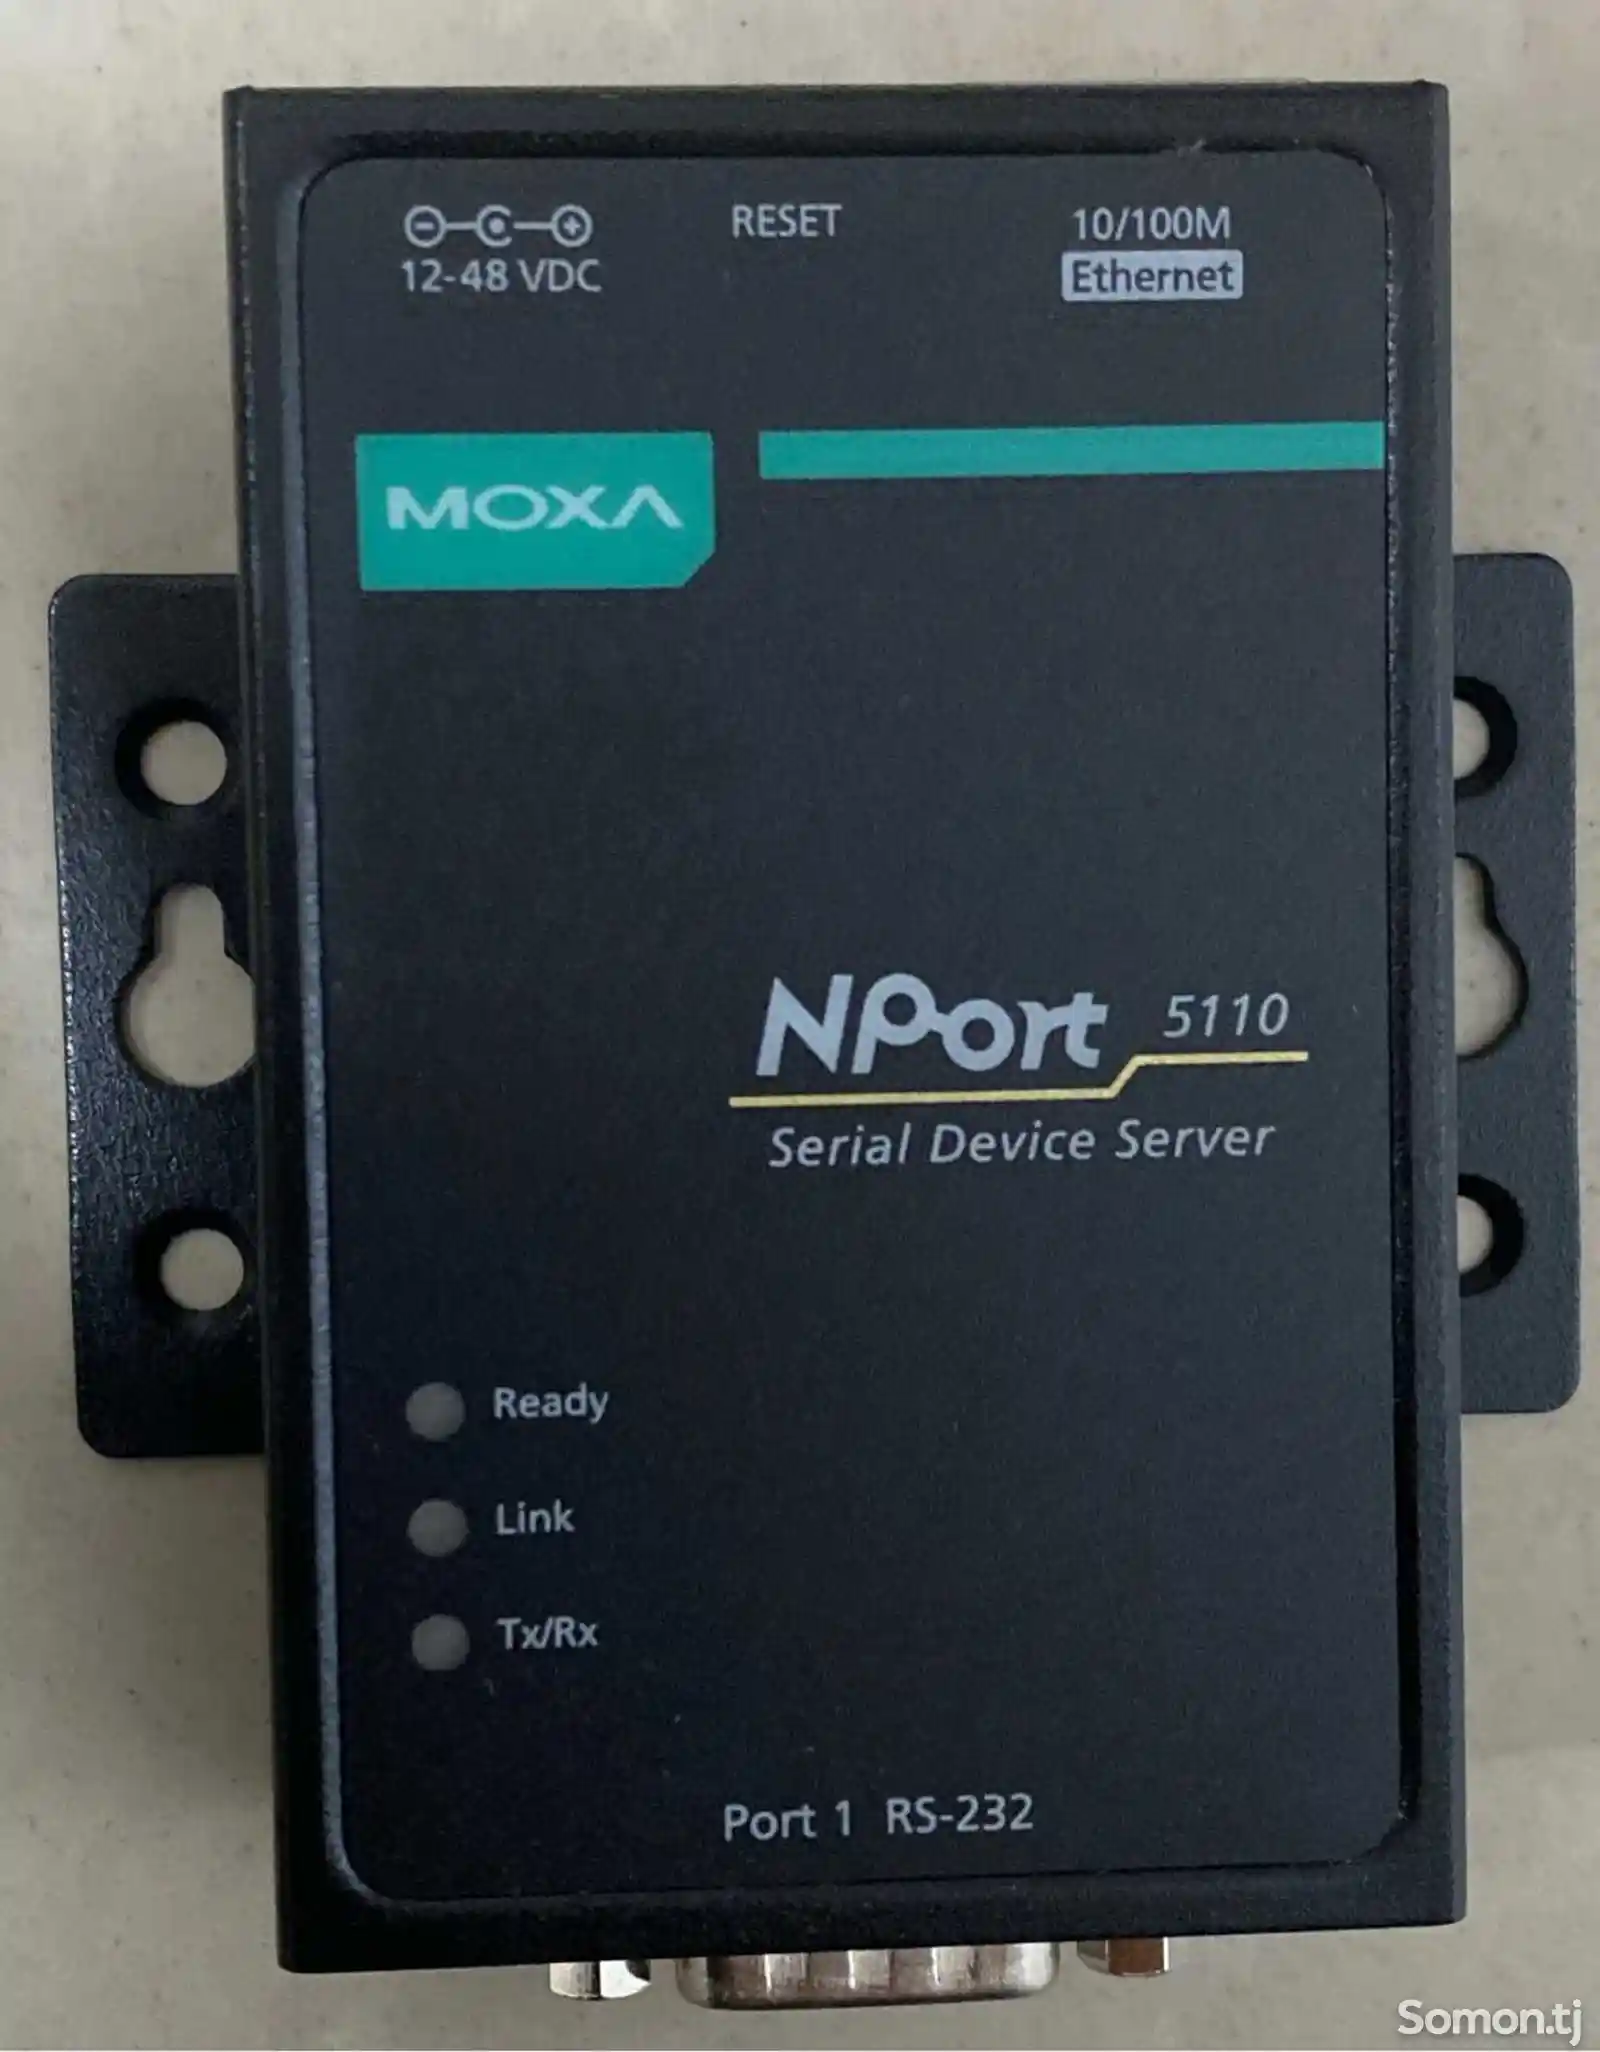 Nport 5110 RS-232 в Ethernet-1